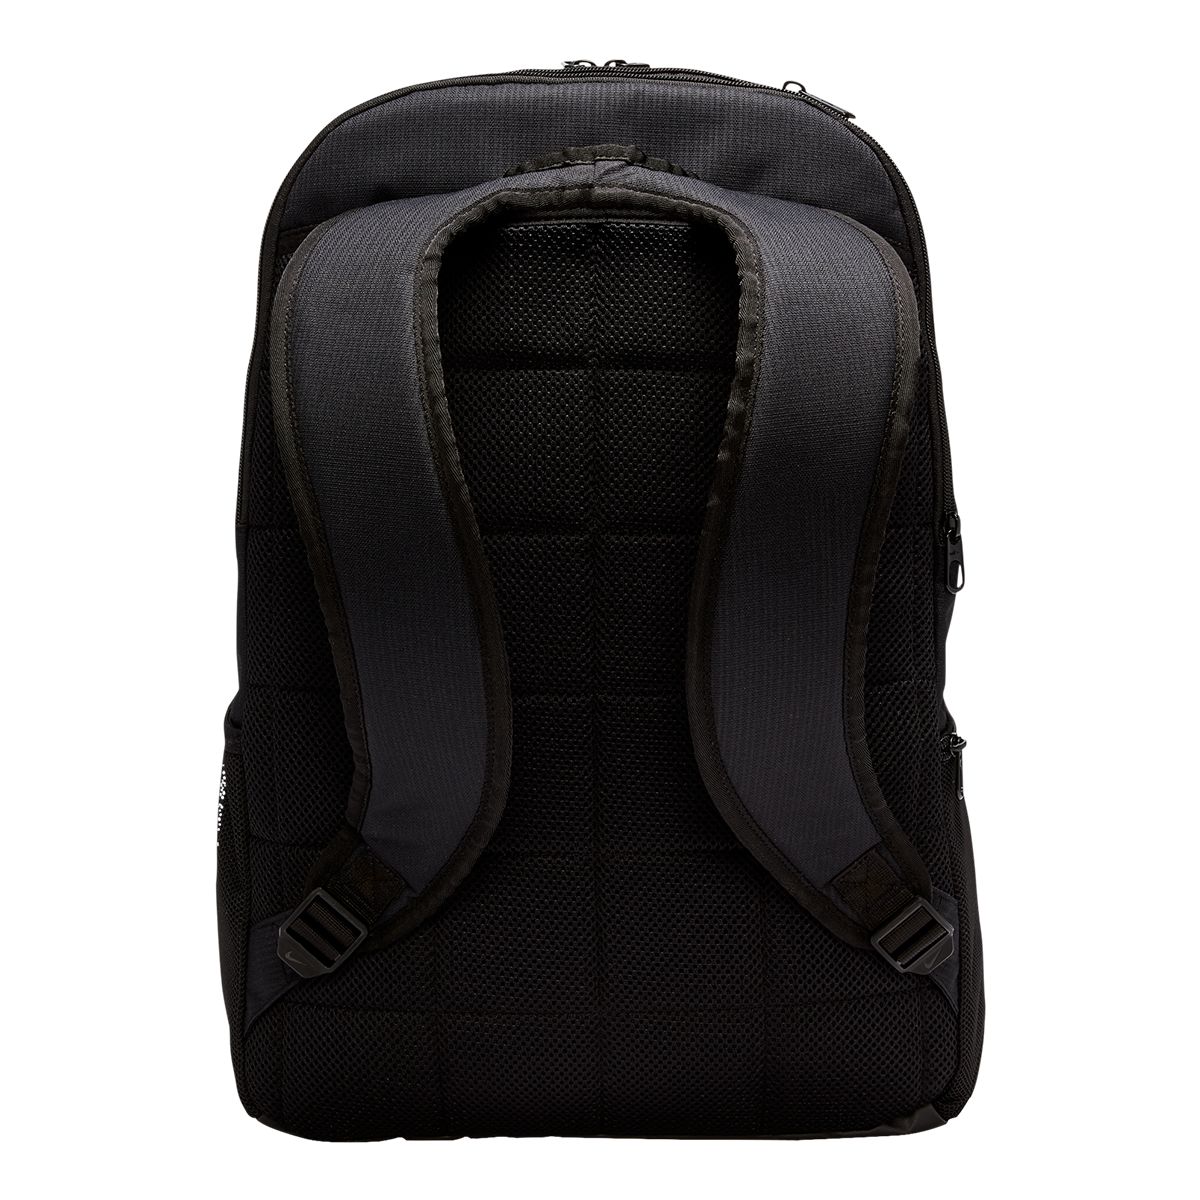 Nike Brasilia Backpack Black/White, £33.00